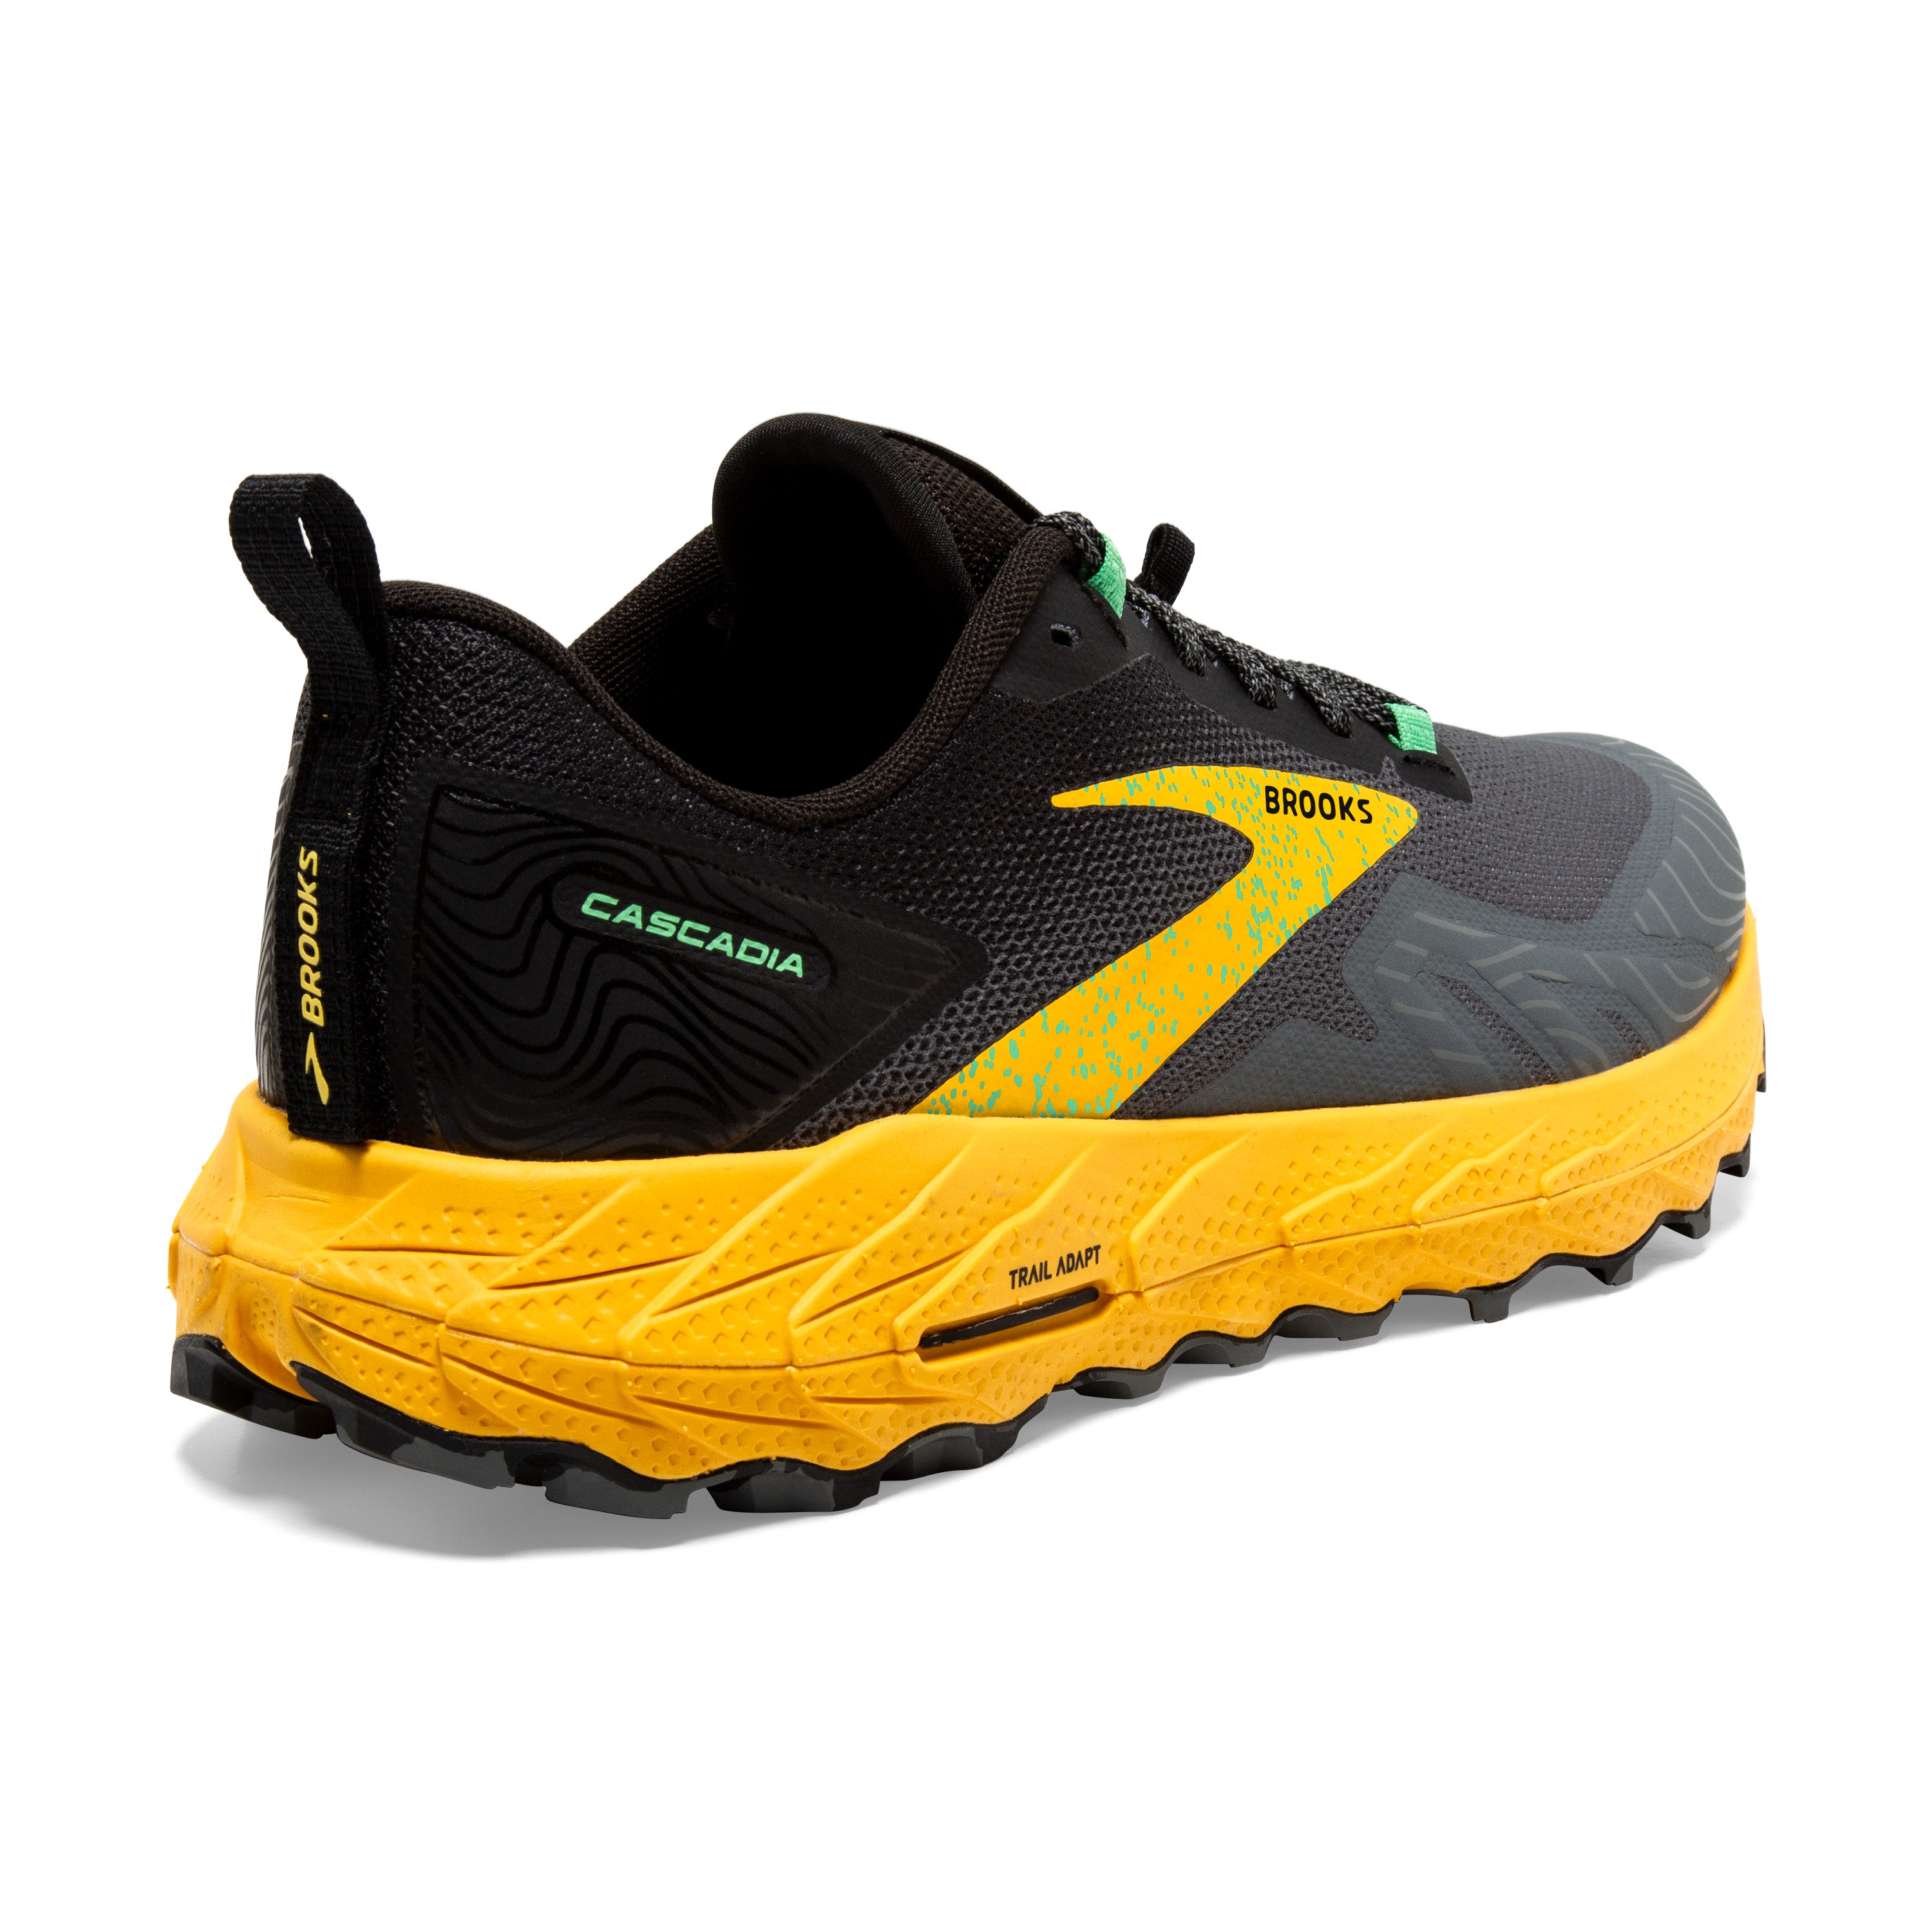 Cascadia 17 Men's Trail Running Shoes